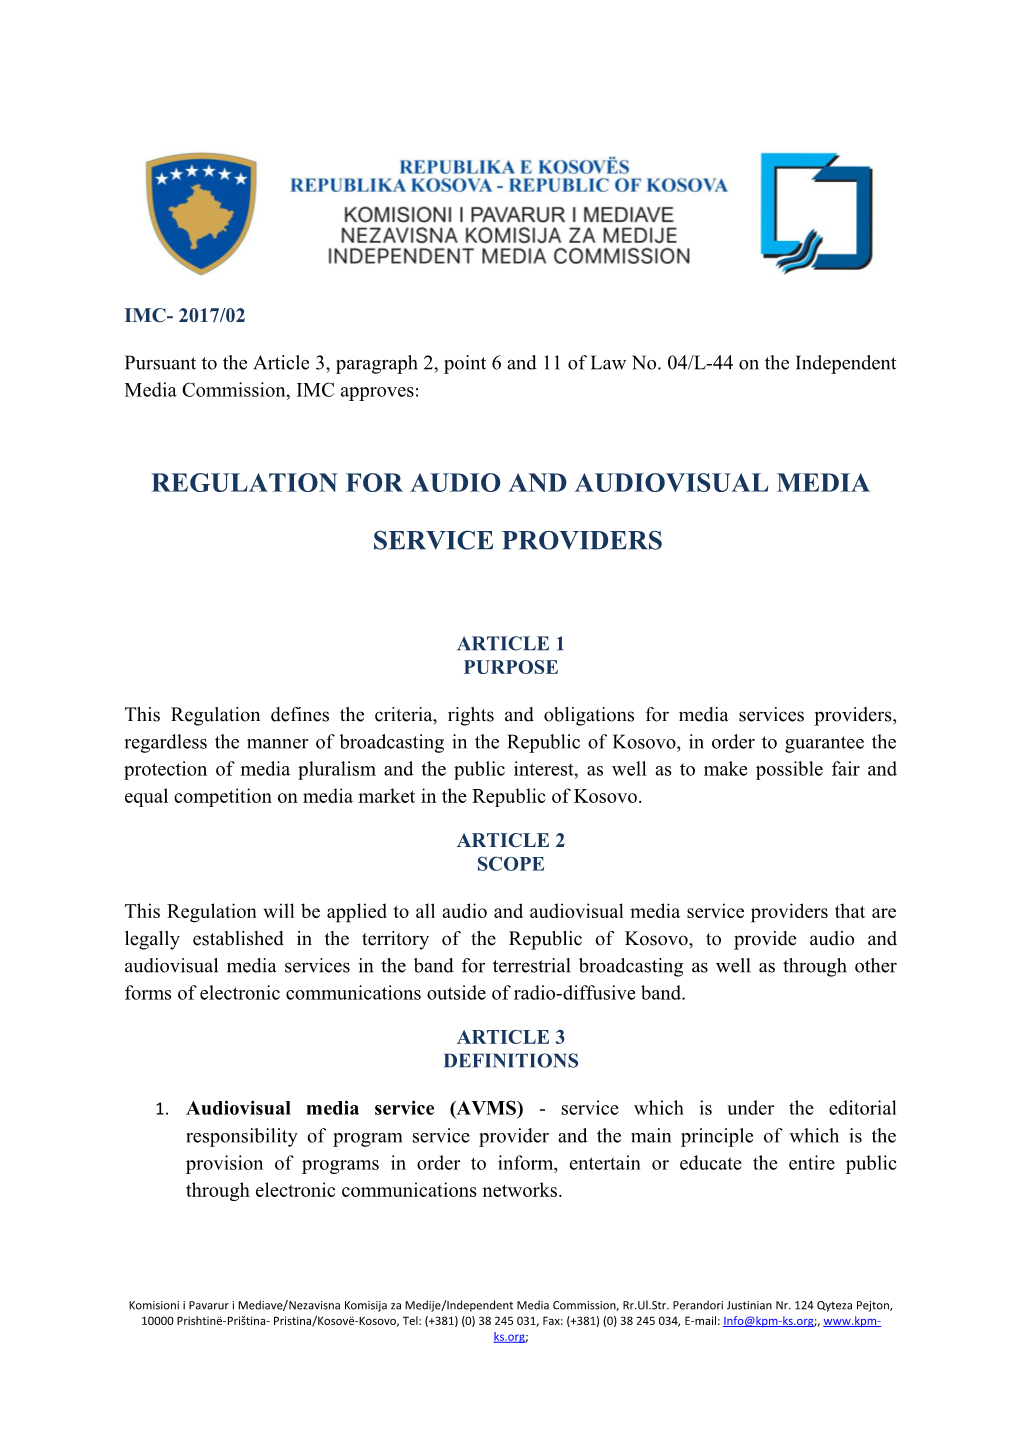 Regulation for Audio and Audiovisual Media